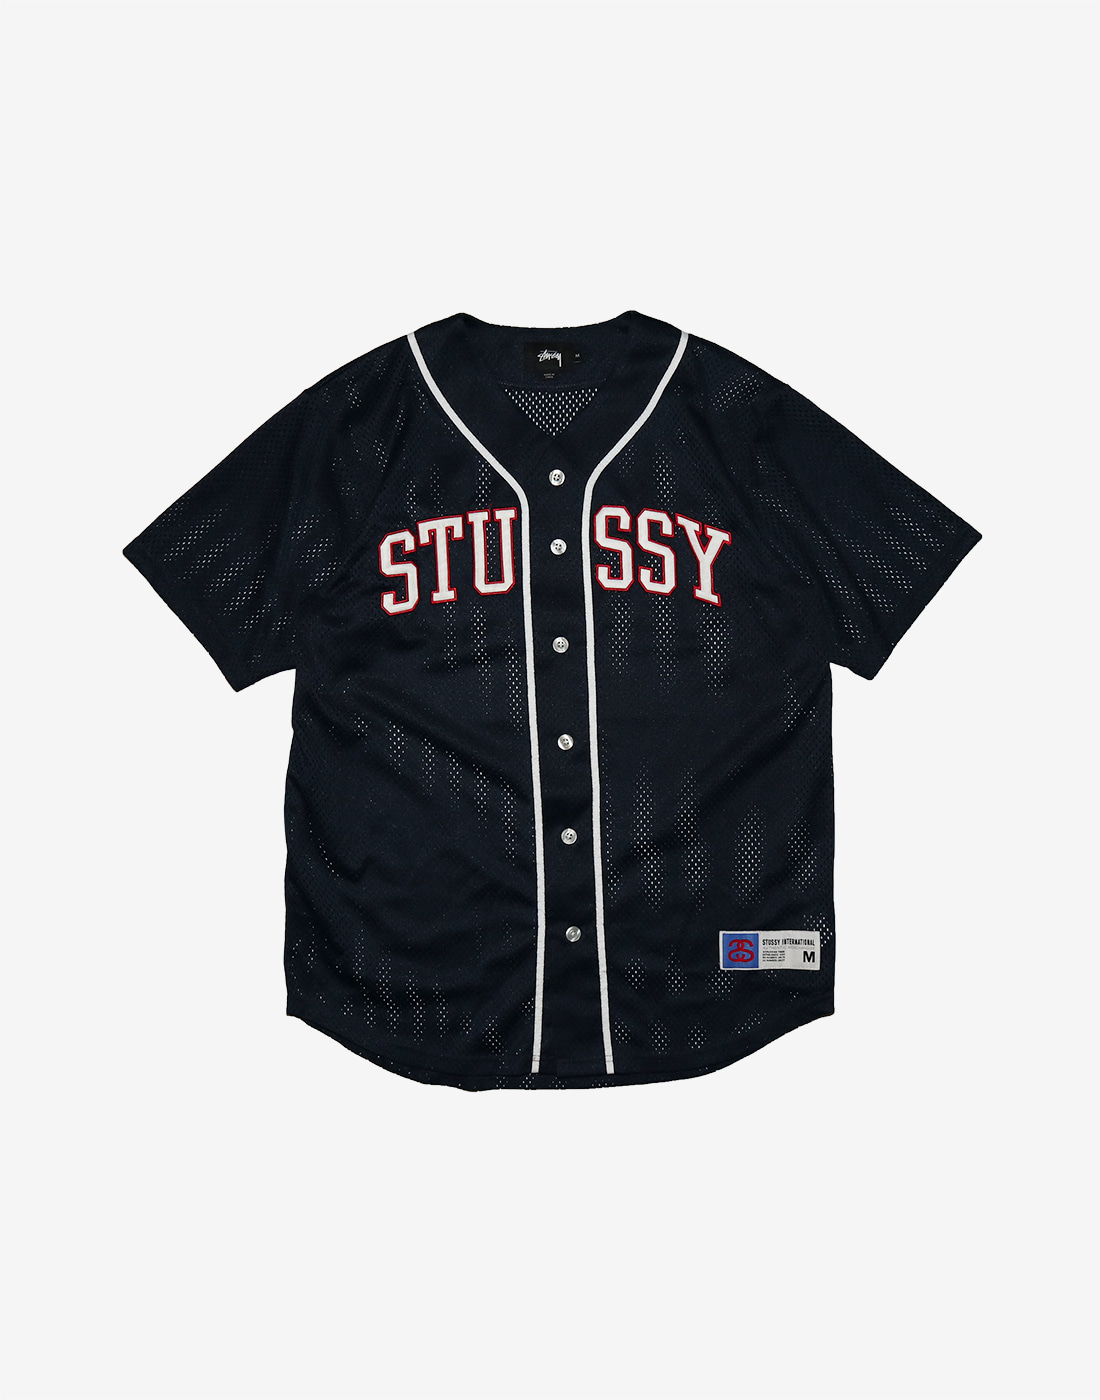 STUSSY Mesh Baseball Jersey, Navy